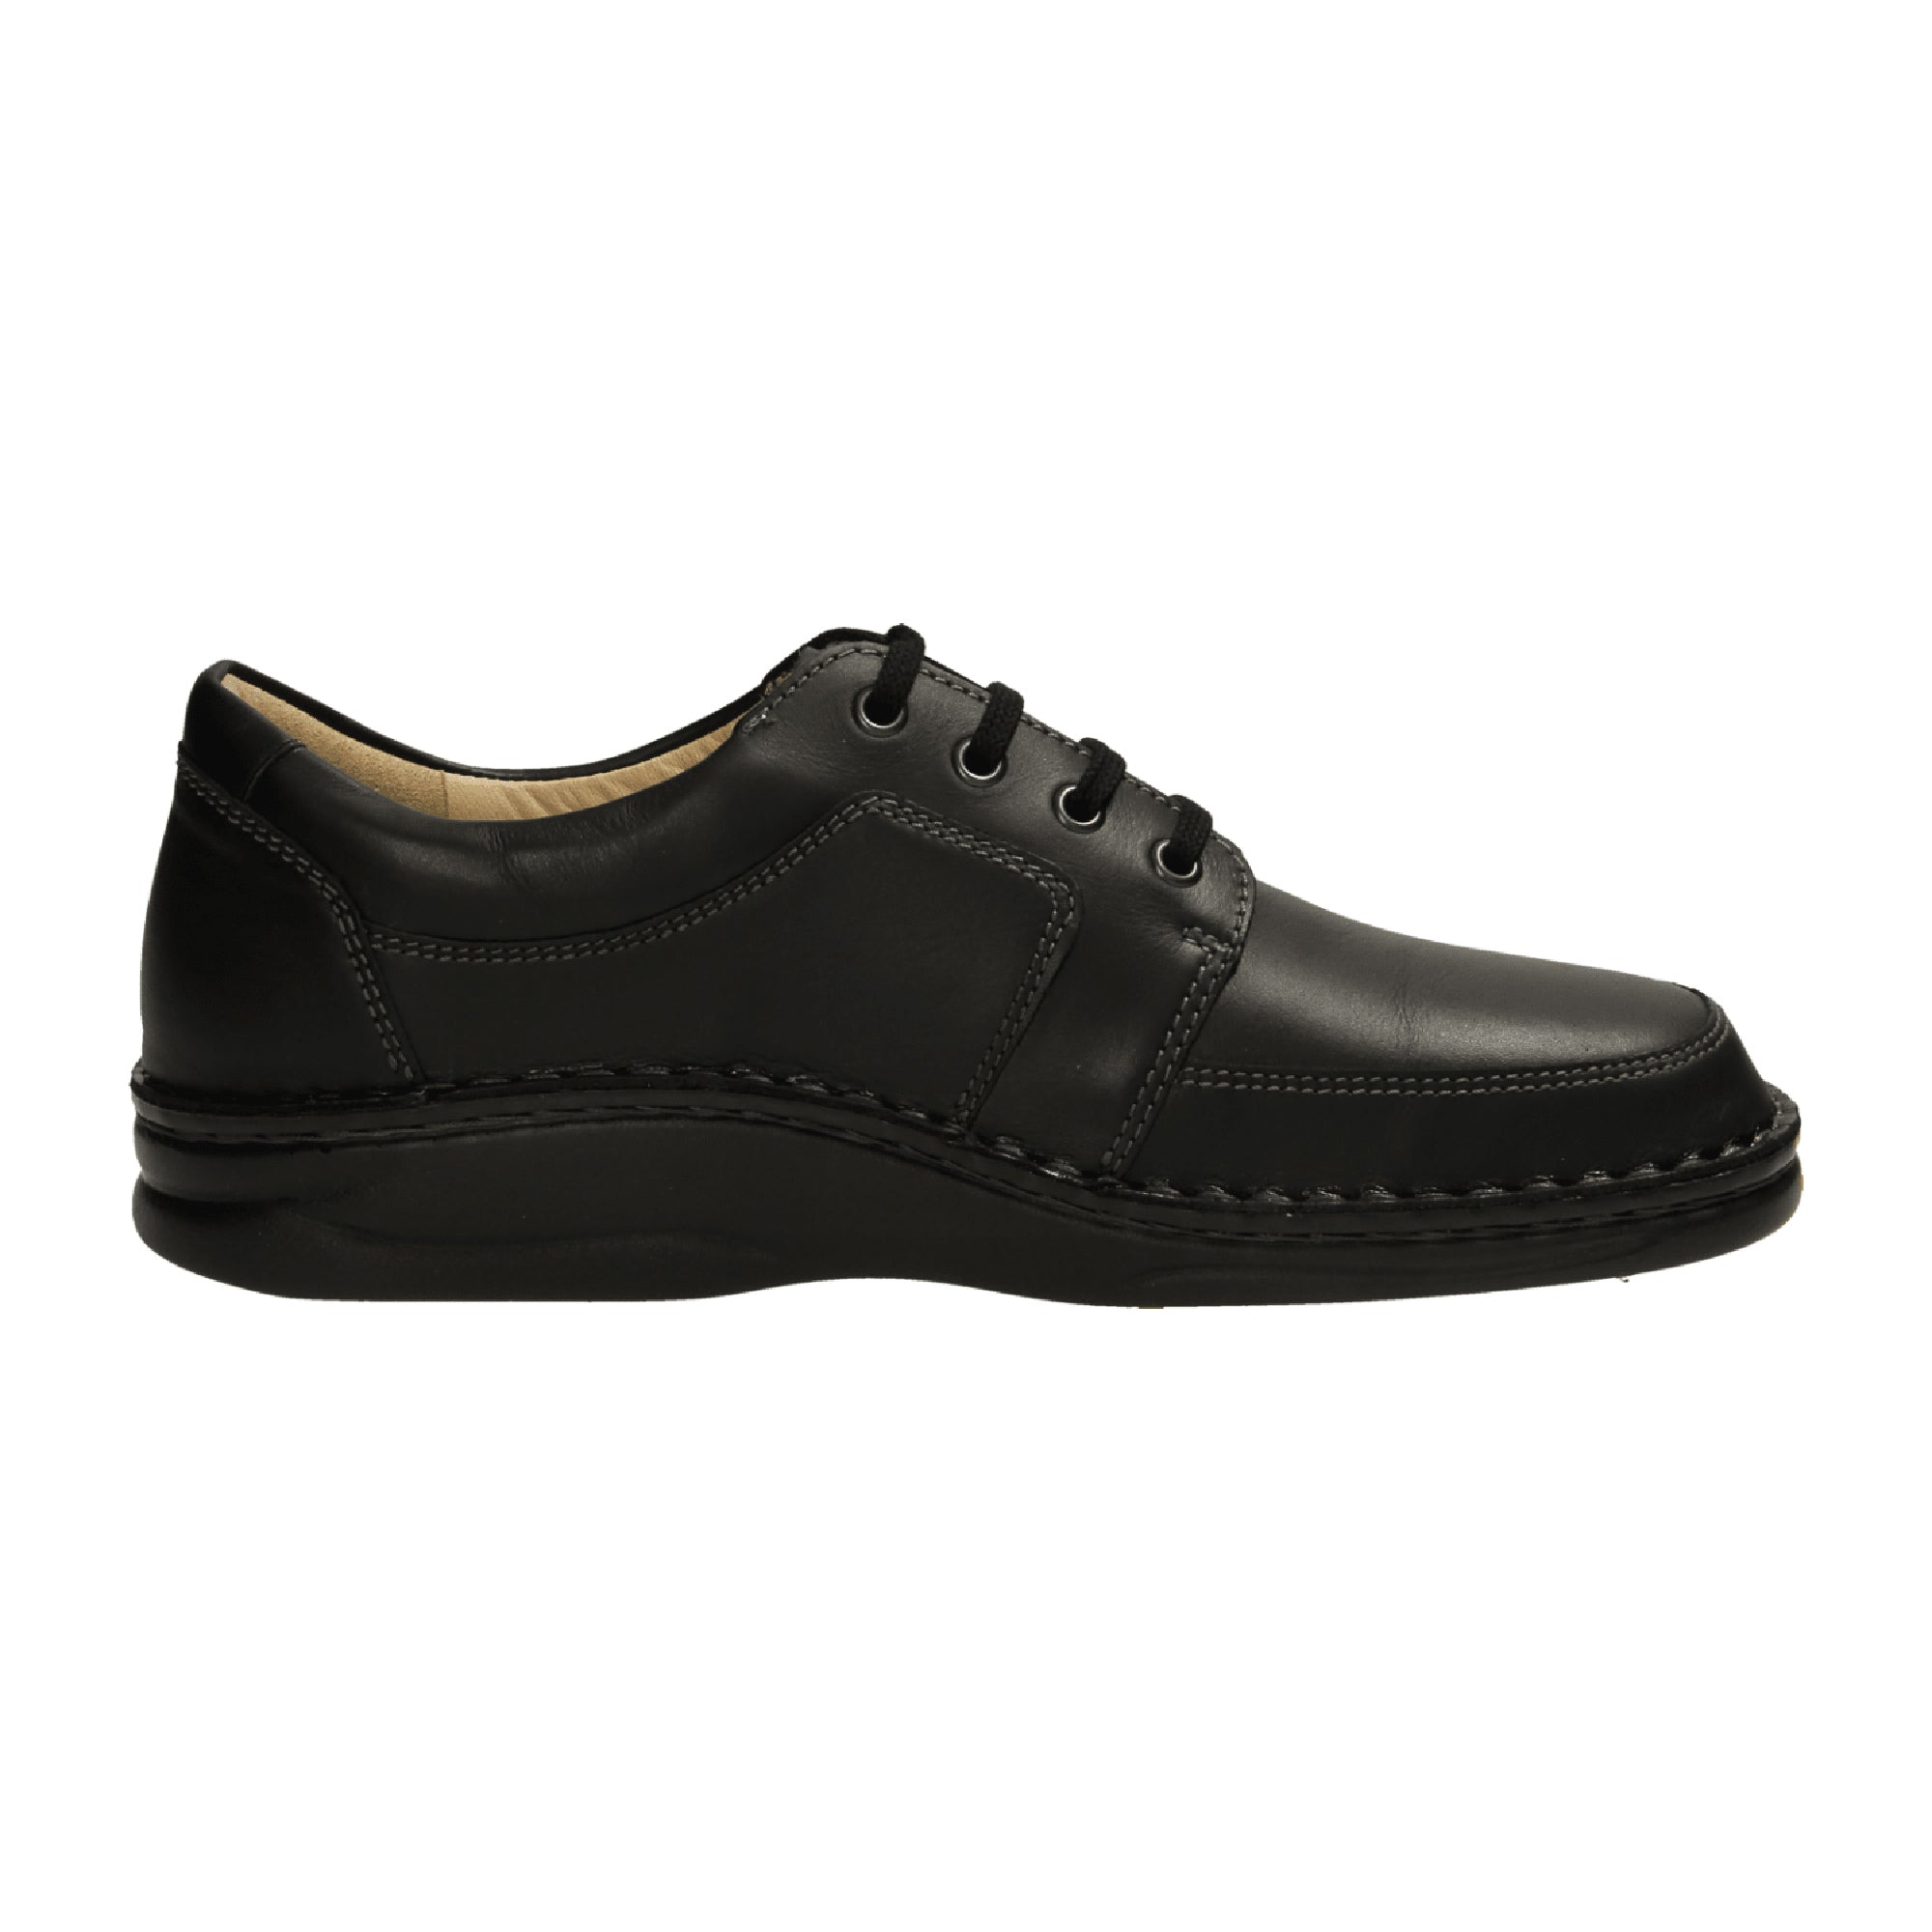 Finn Comfort Norwich Men's Black Shoes - Stylish & Durable Comfort Footwear